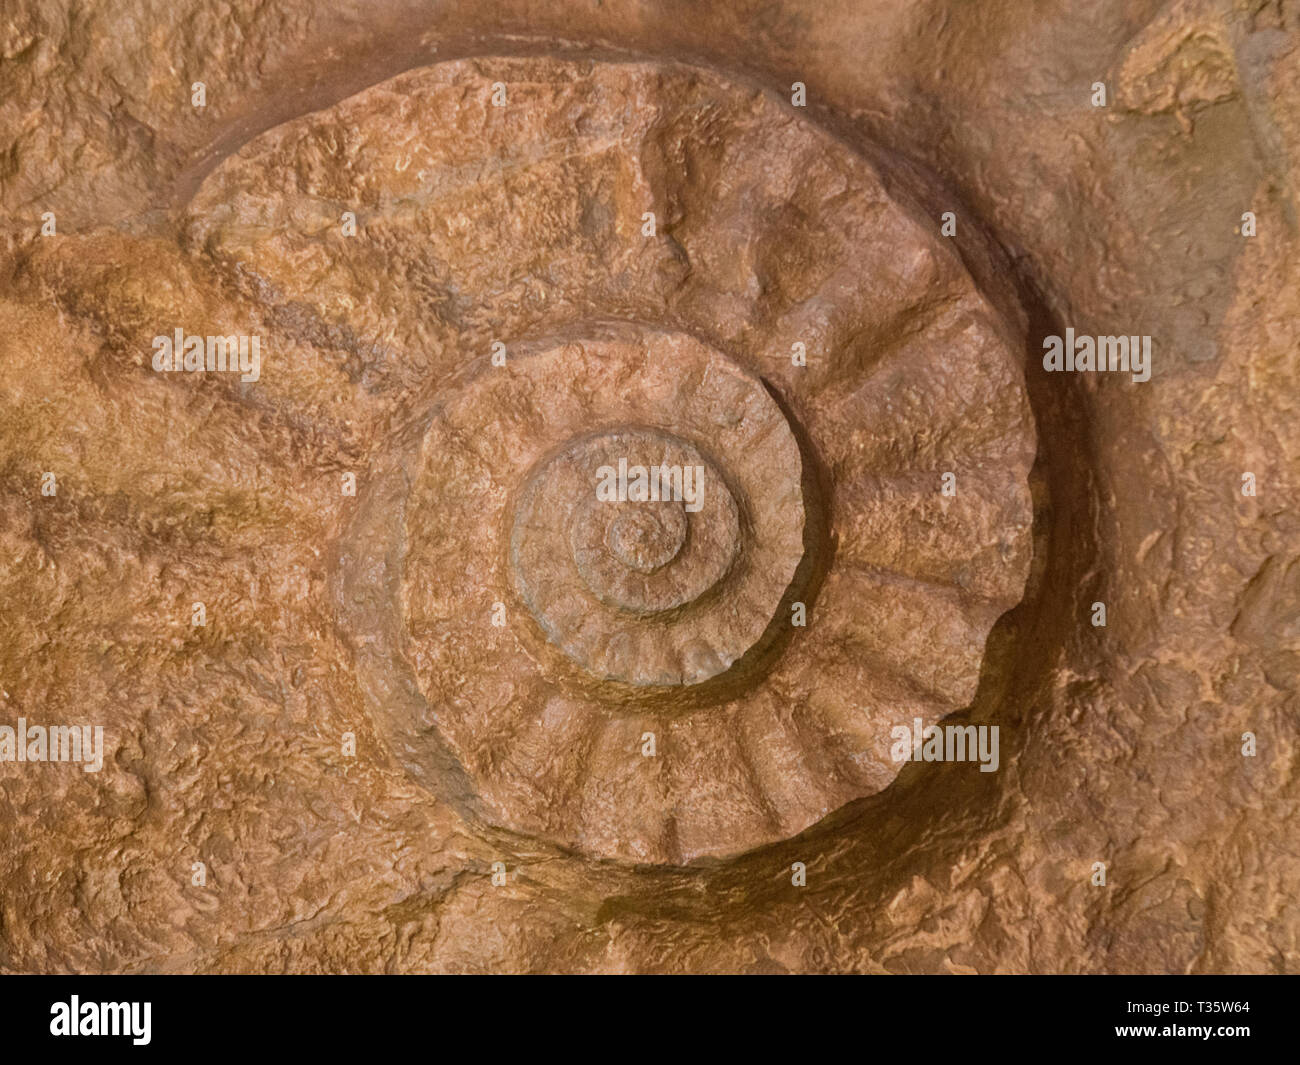 Prehistoric ammonite fossilized imprint on stone. Paleontologic find of jurassic era shell. Stock Photo